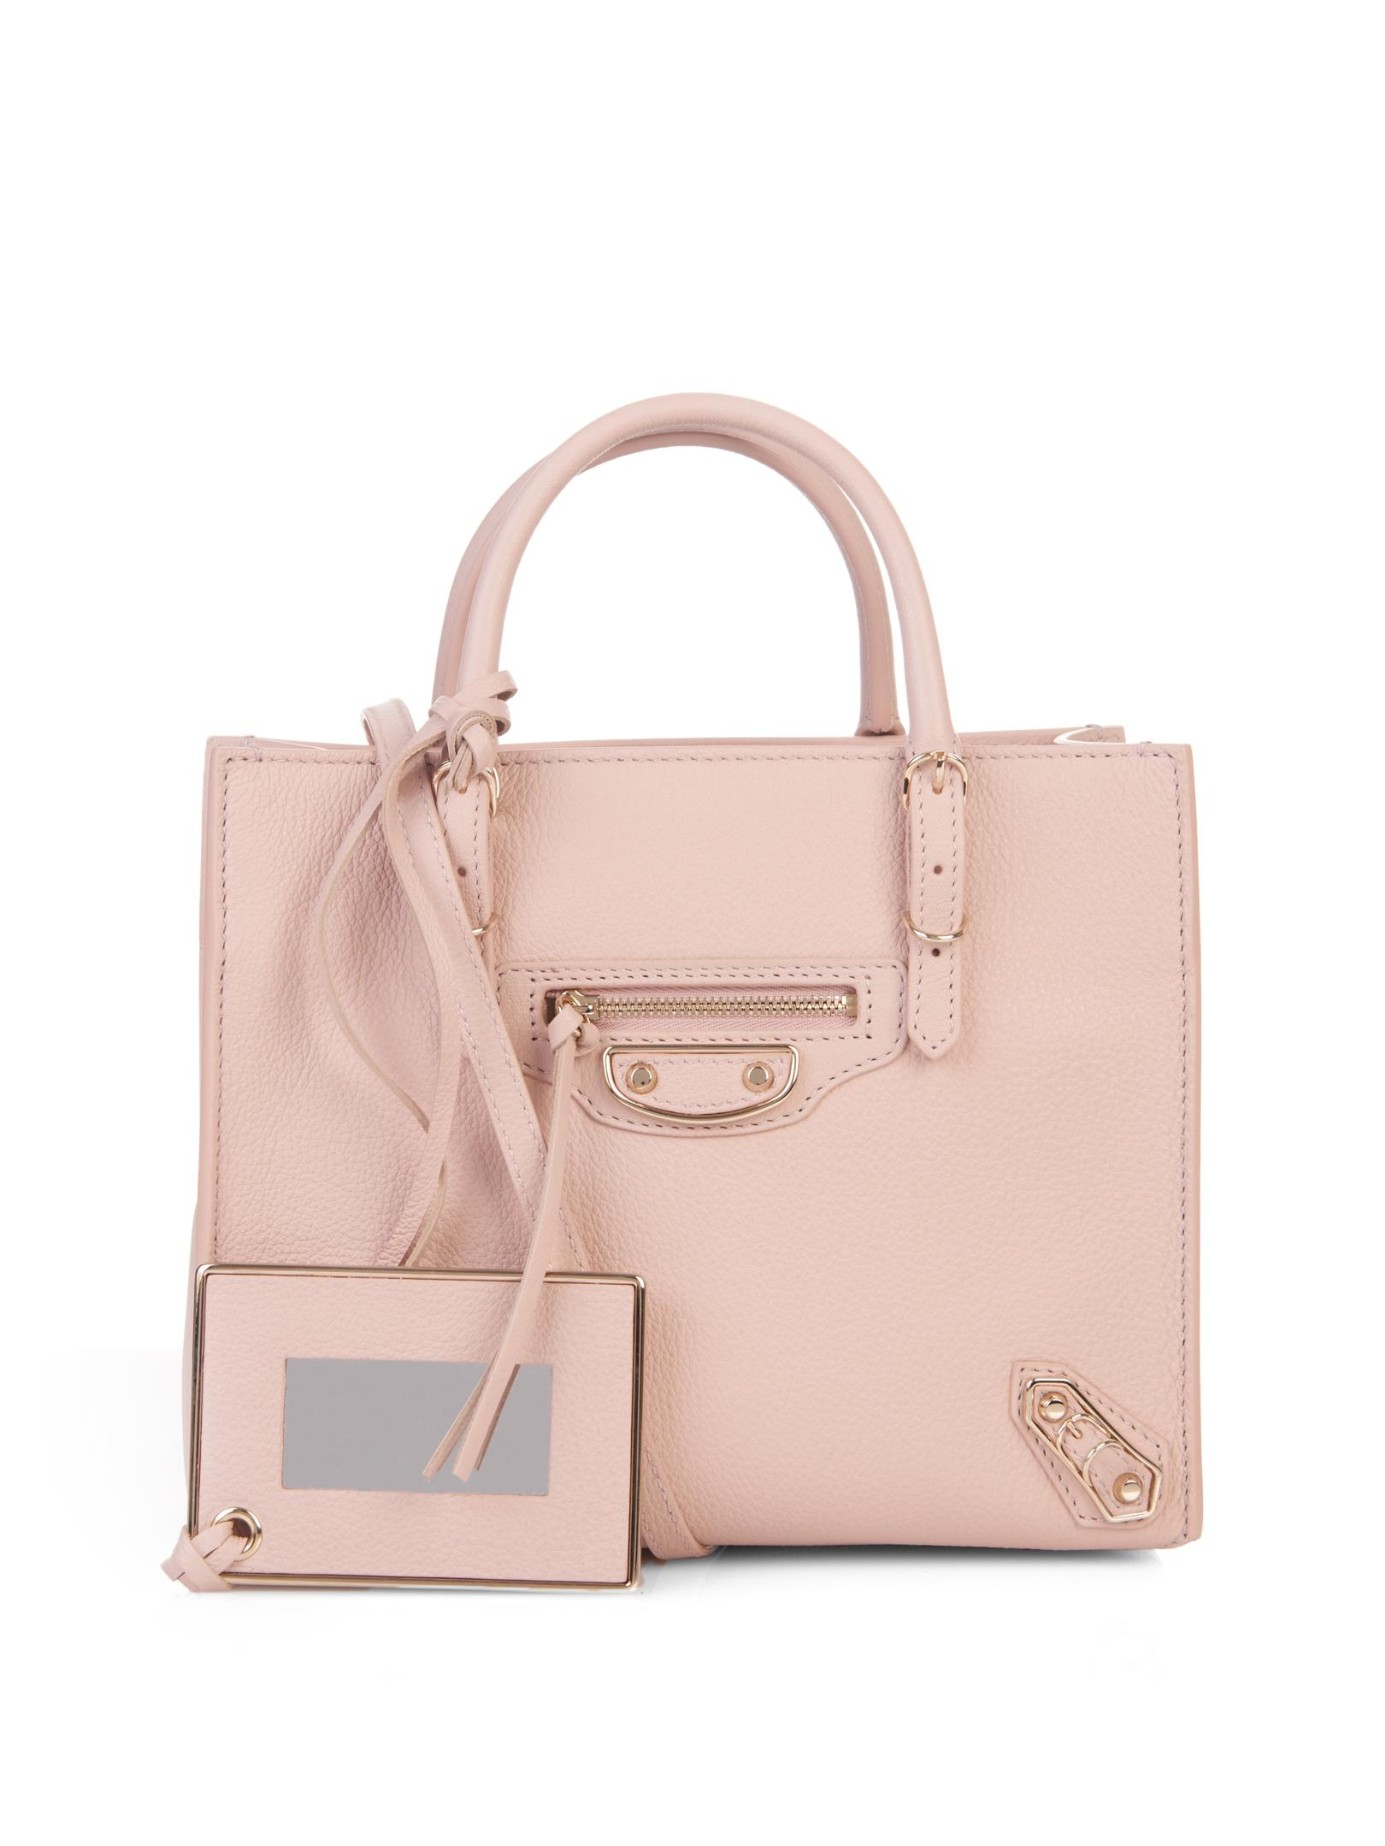 Balenciaga Mini Papier A4 Leather Cross-Body Bag in Pink | Lyst